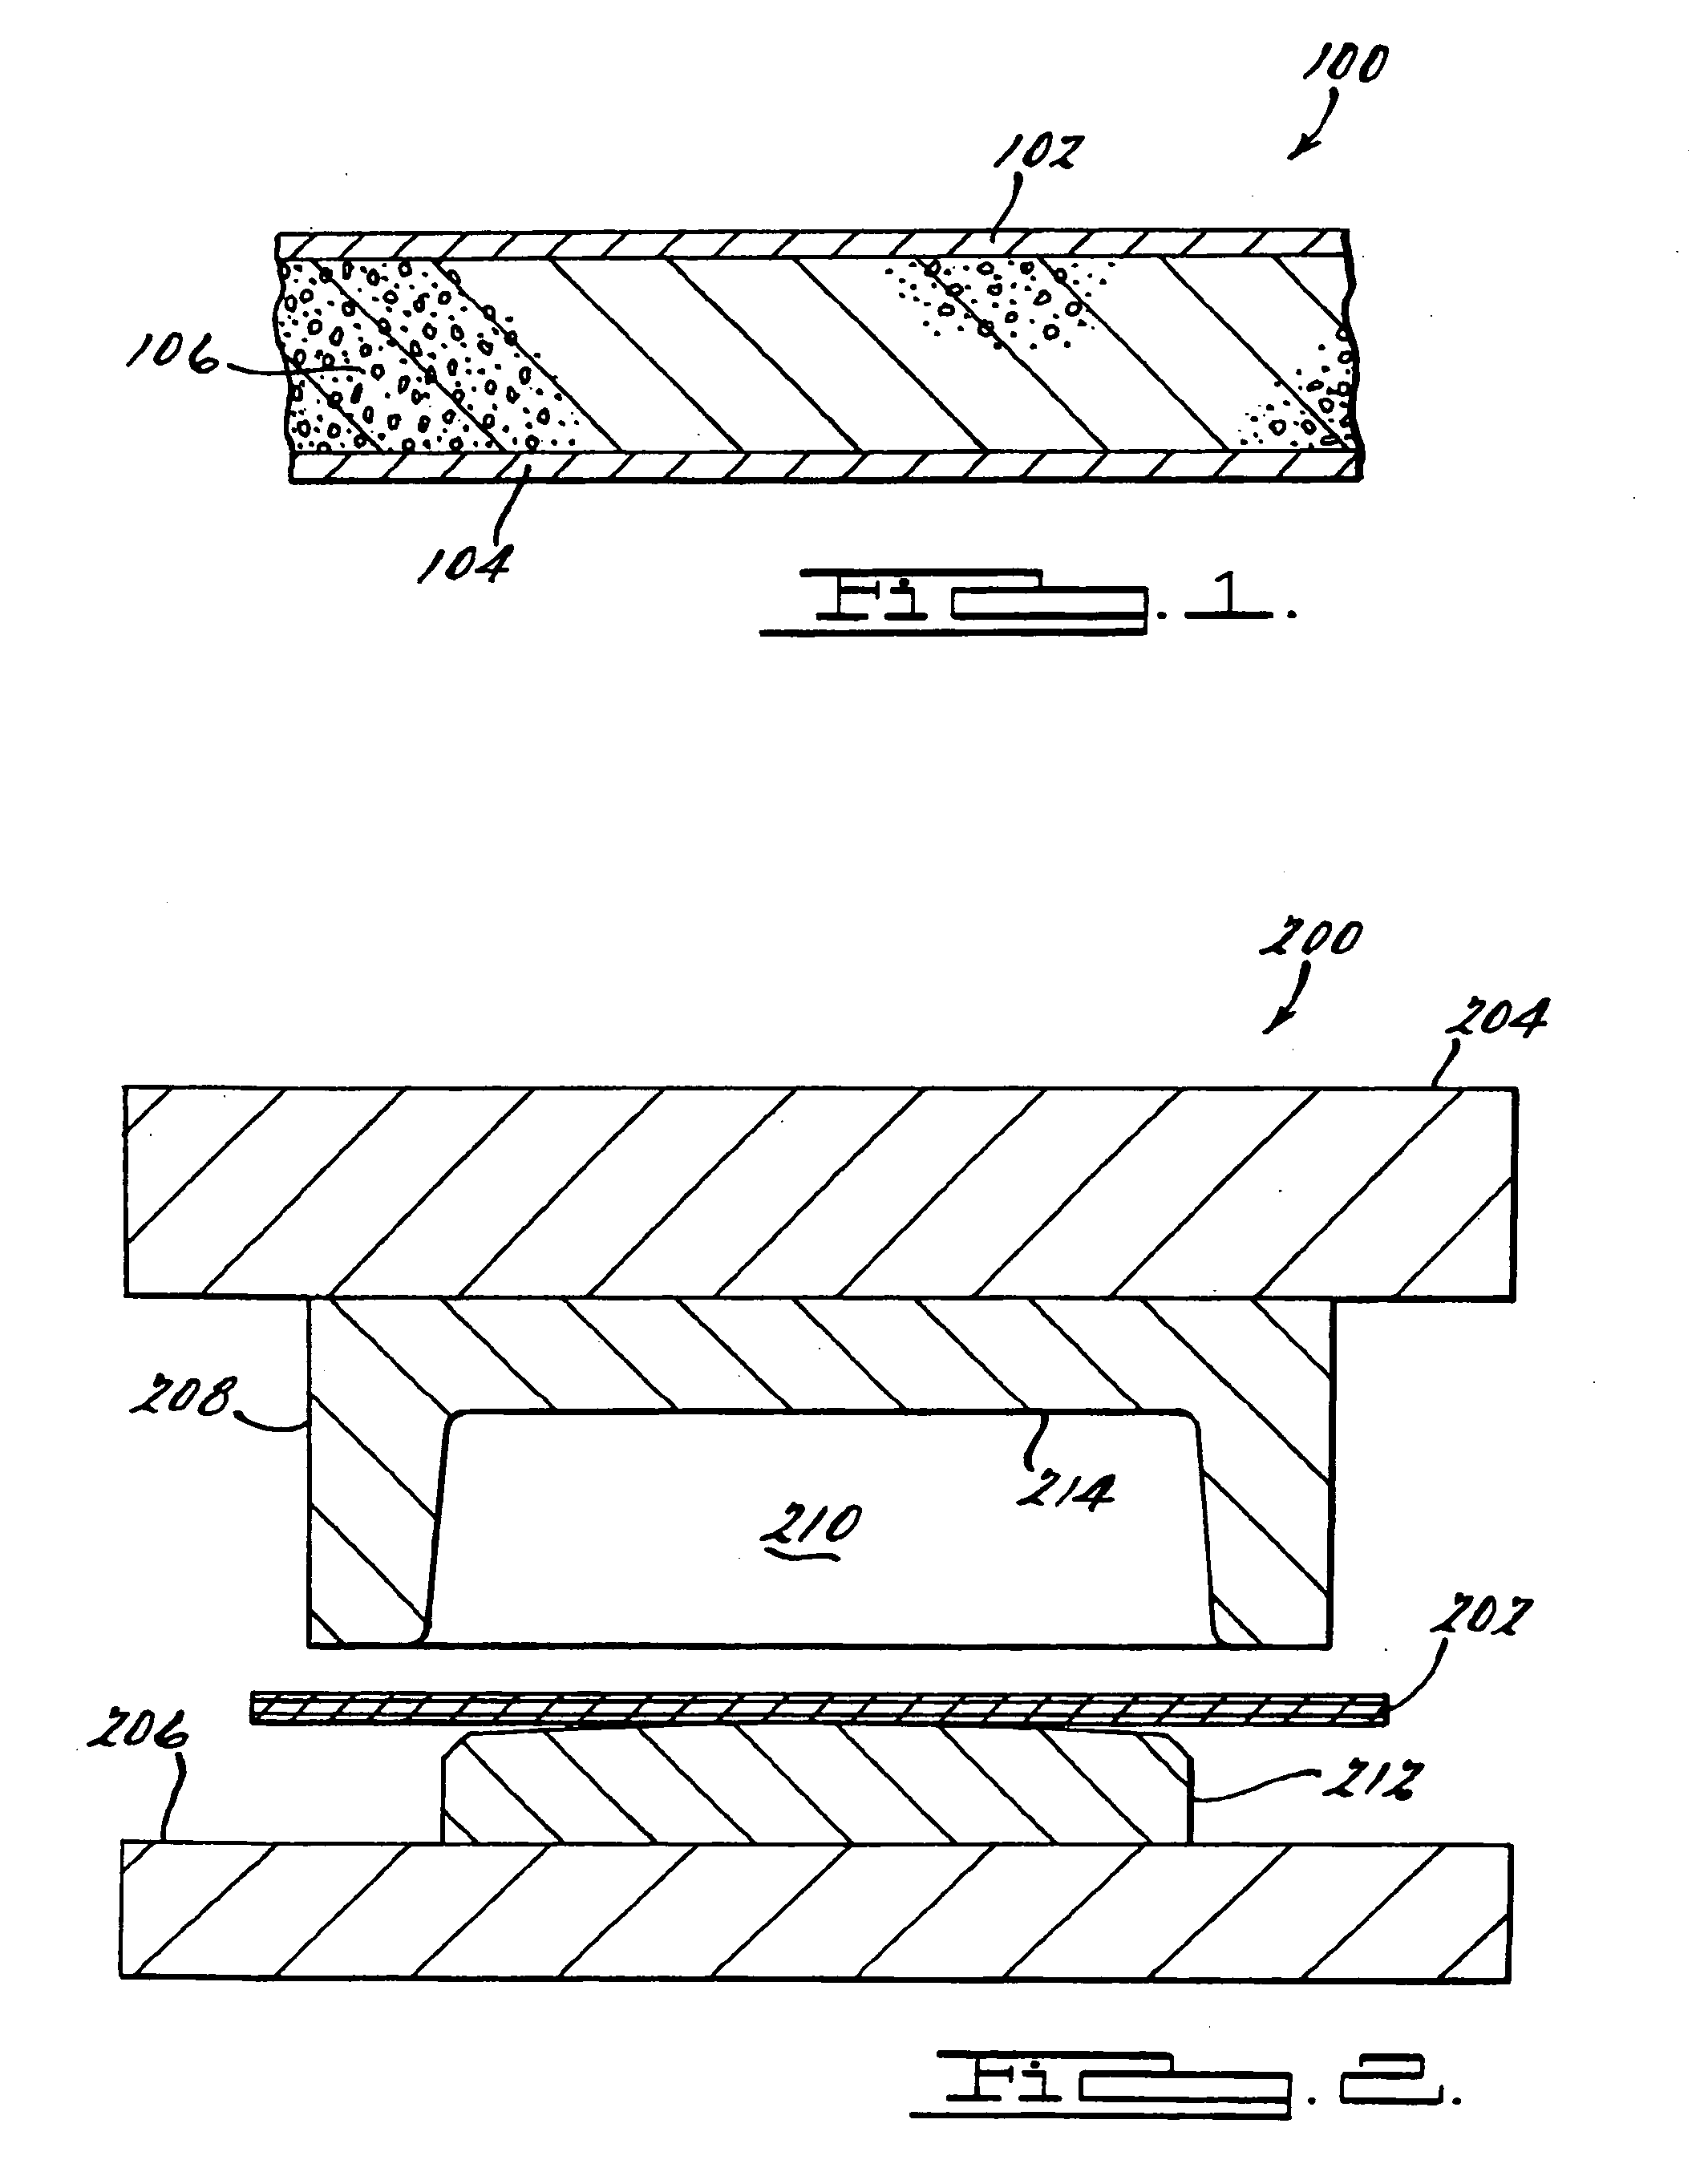 Method of metallic sandwiched foam composite forming